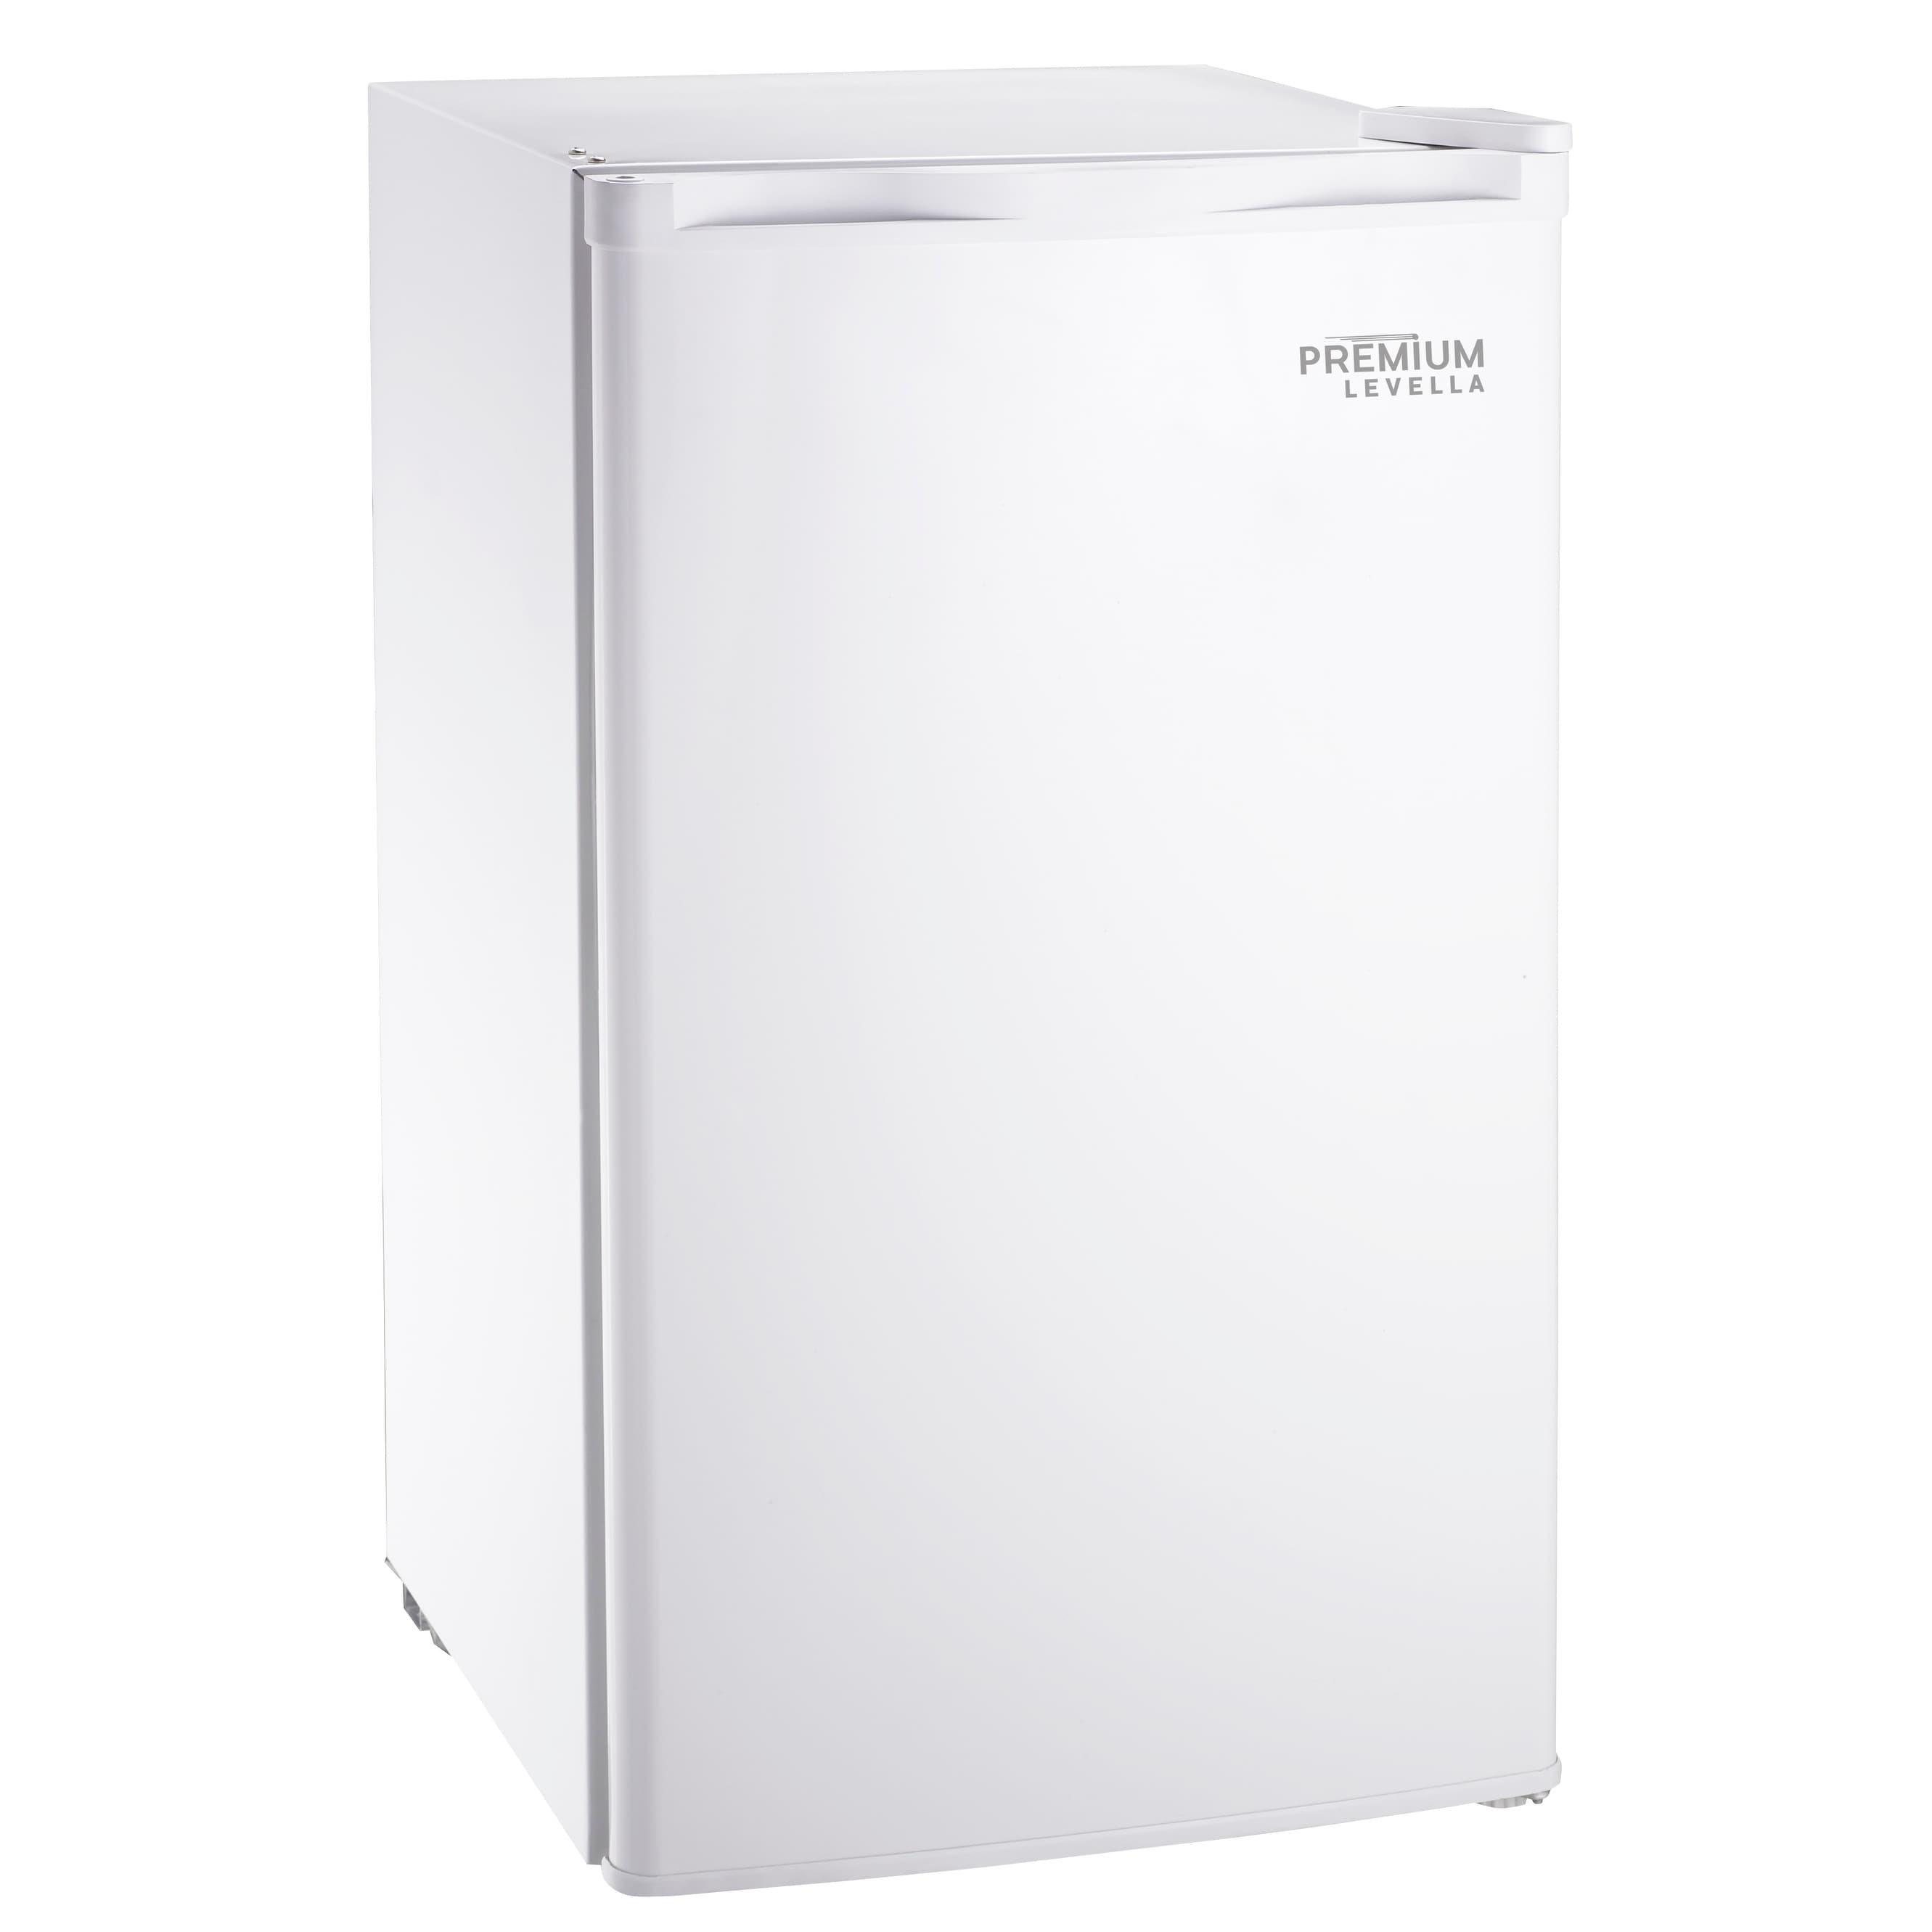 Mini Fridge with Freezer 3.2 Cu.Ft Compact Refrigerator for Bedroom Dorm  White, 1 Unit - Gerbes Super Markets